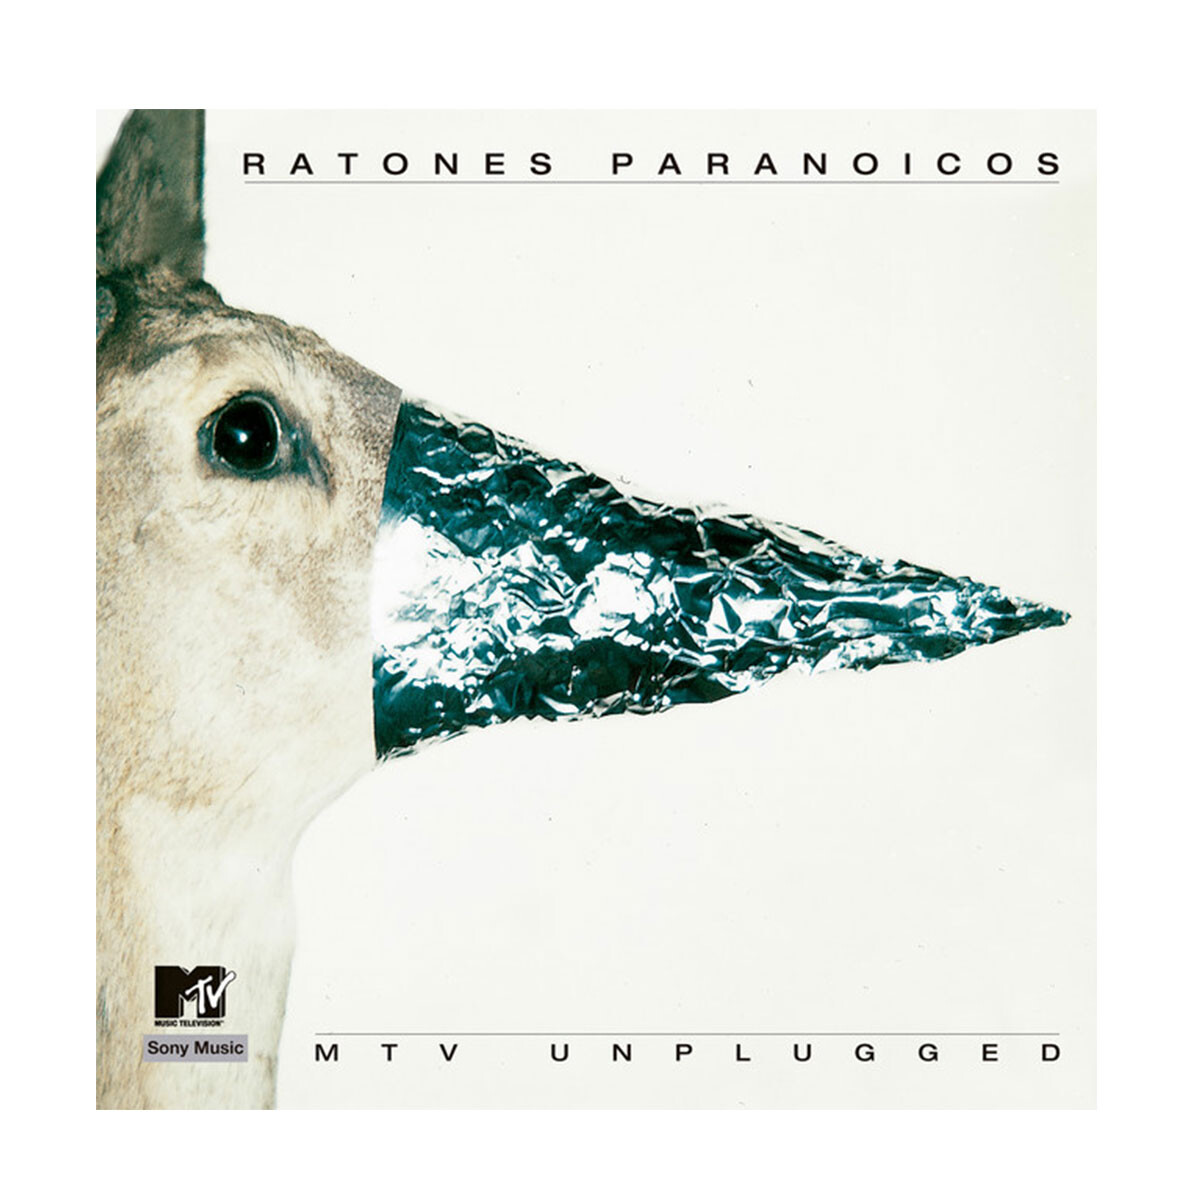 Ratones Paranoicos - Mtv Unplugged - Vinilo 